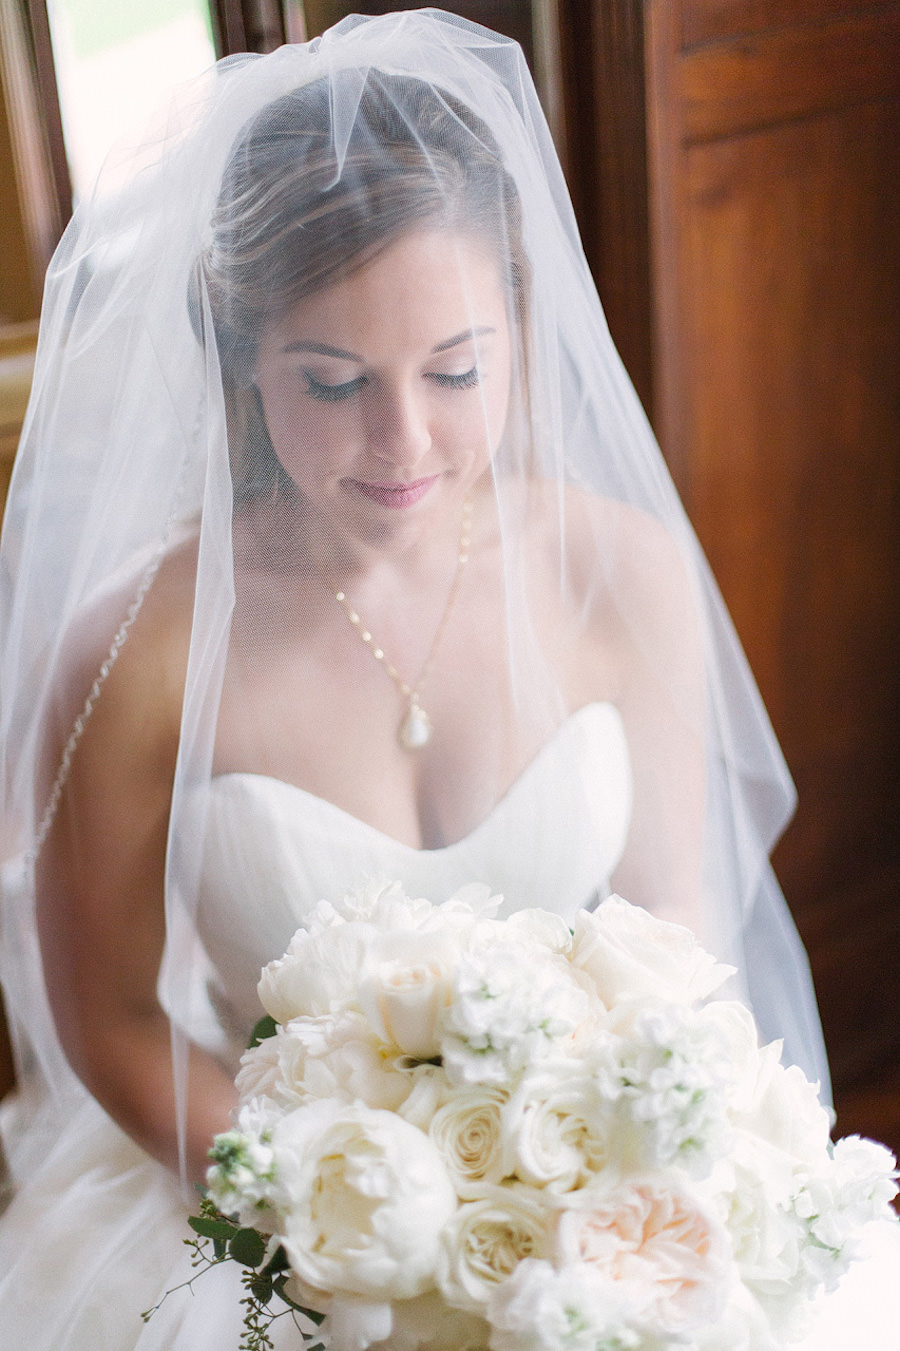 Traditional Bridal Wedding Portrait in Strapless, White Wedding Dress, Veil, and White Floral Bridal Bouquet | Bradenton Wedding Florist Iza's Flowers